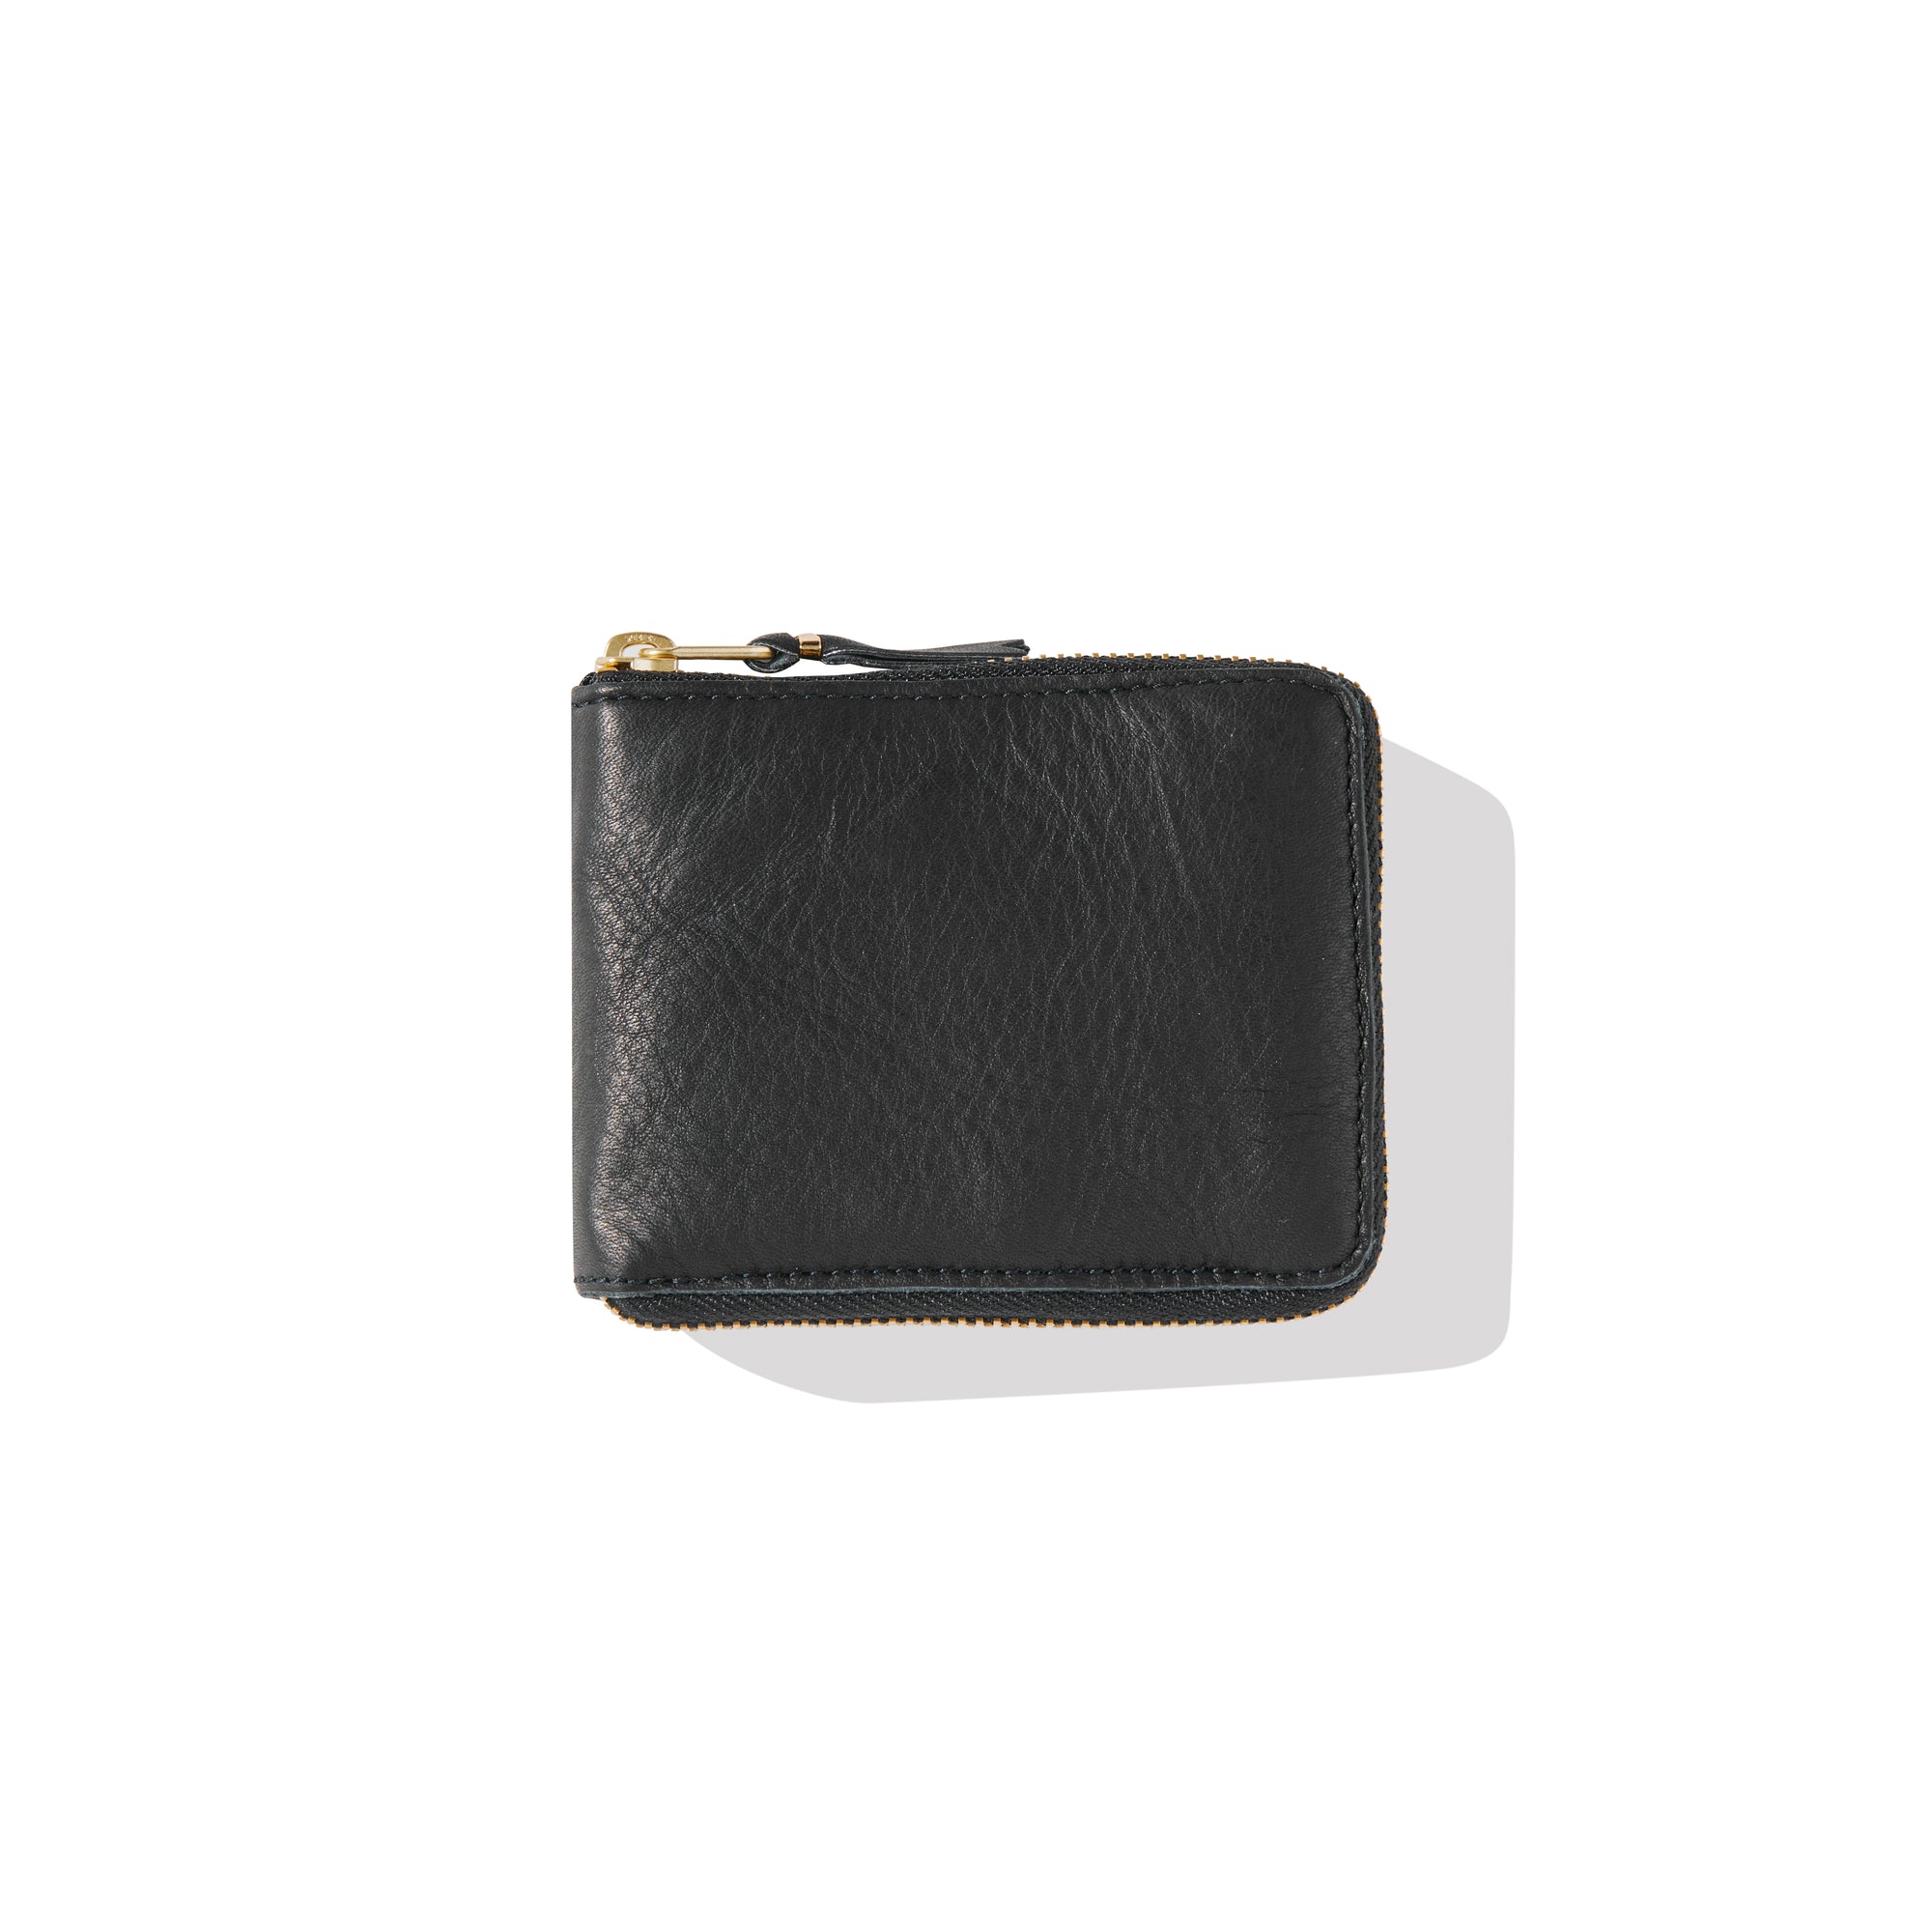 CDG Wallet - Washed Full Zip Around Wallet - (Black) 7100 view 1